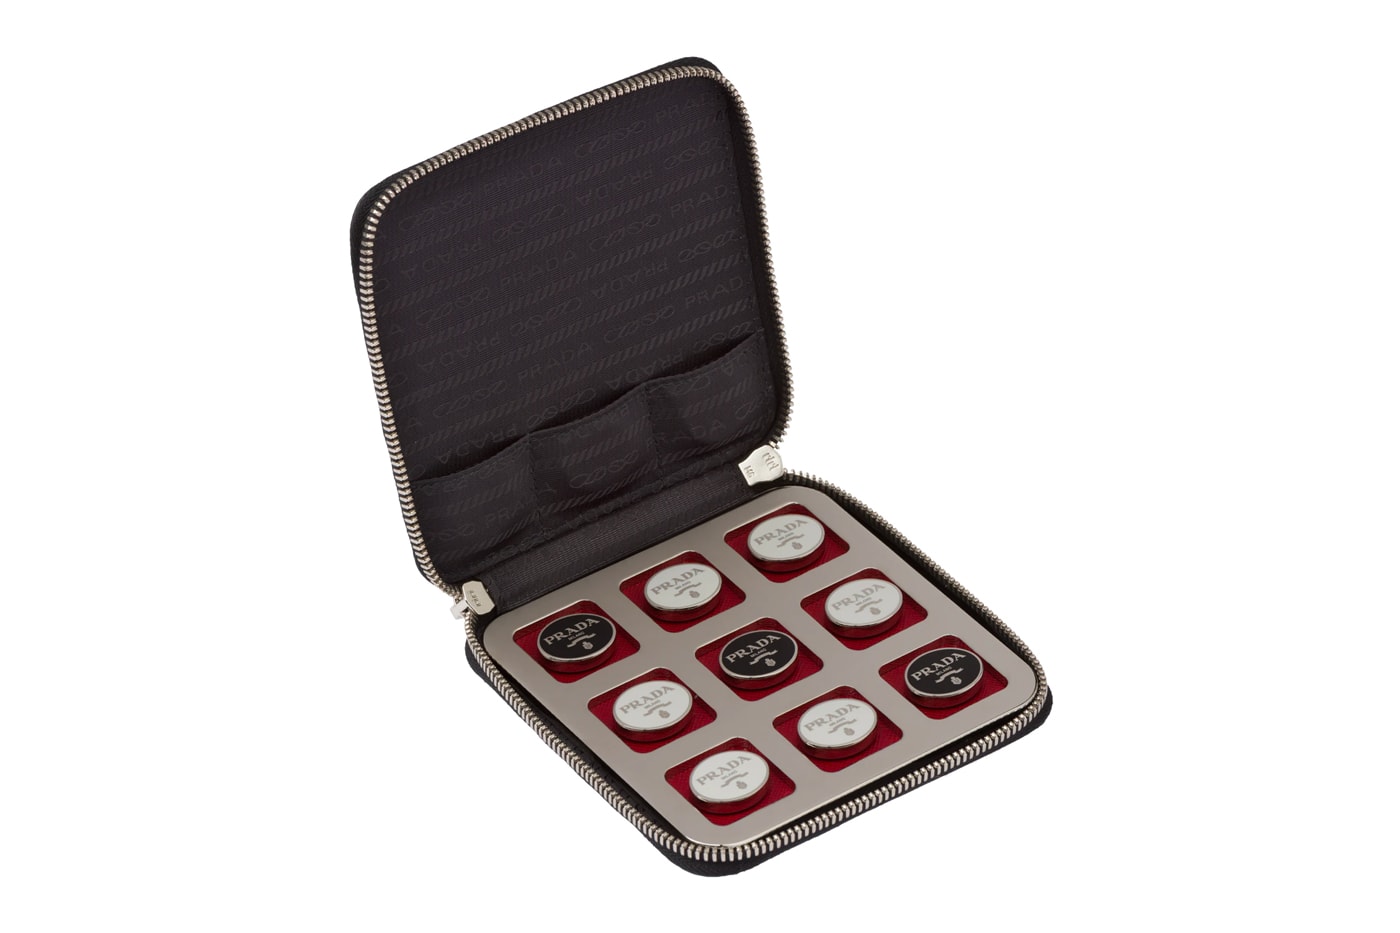 prada Saffiano leather Tic-Tac-Toe Set release 2SG003_0DC_F0002 designer home accessories luxury decor games board games